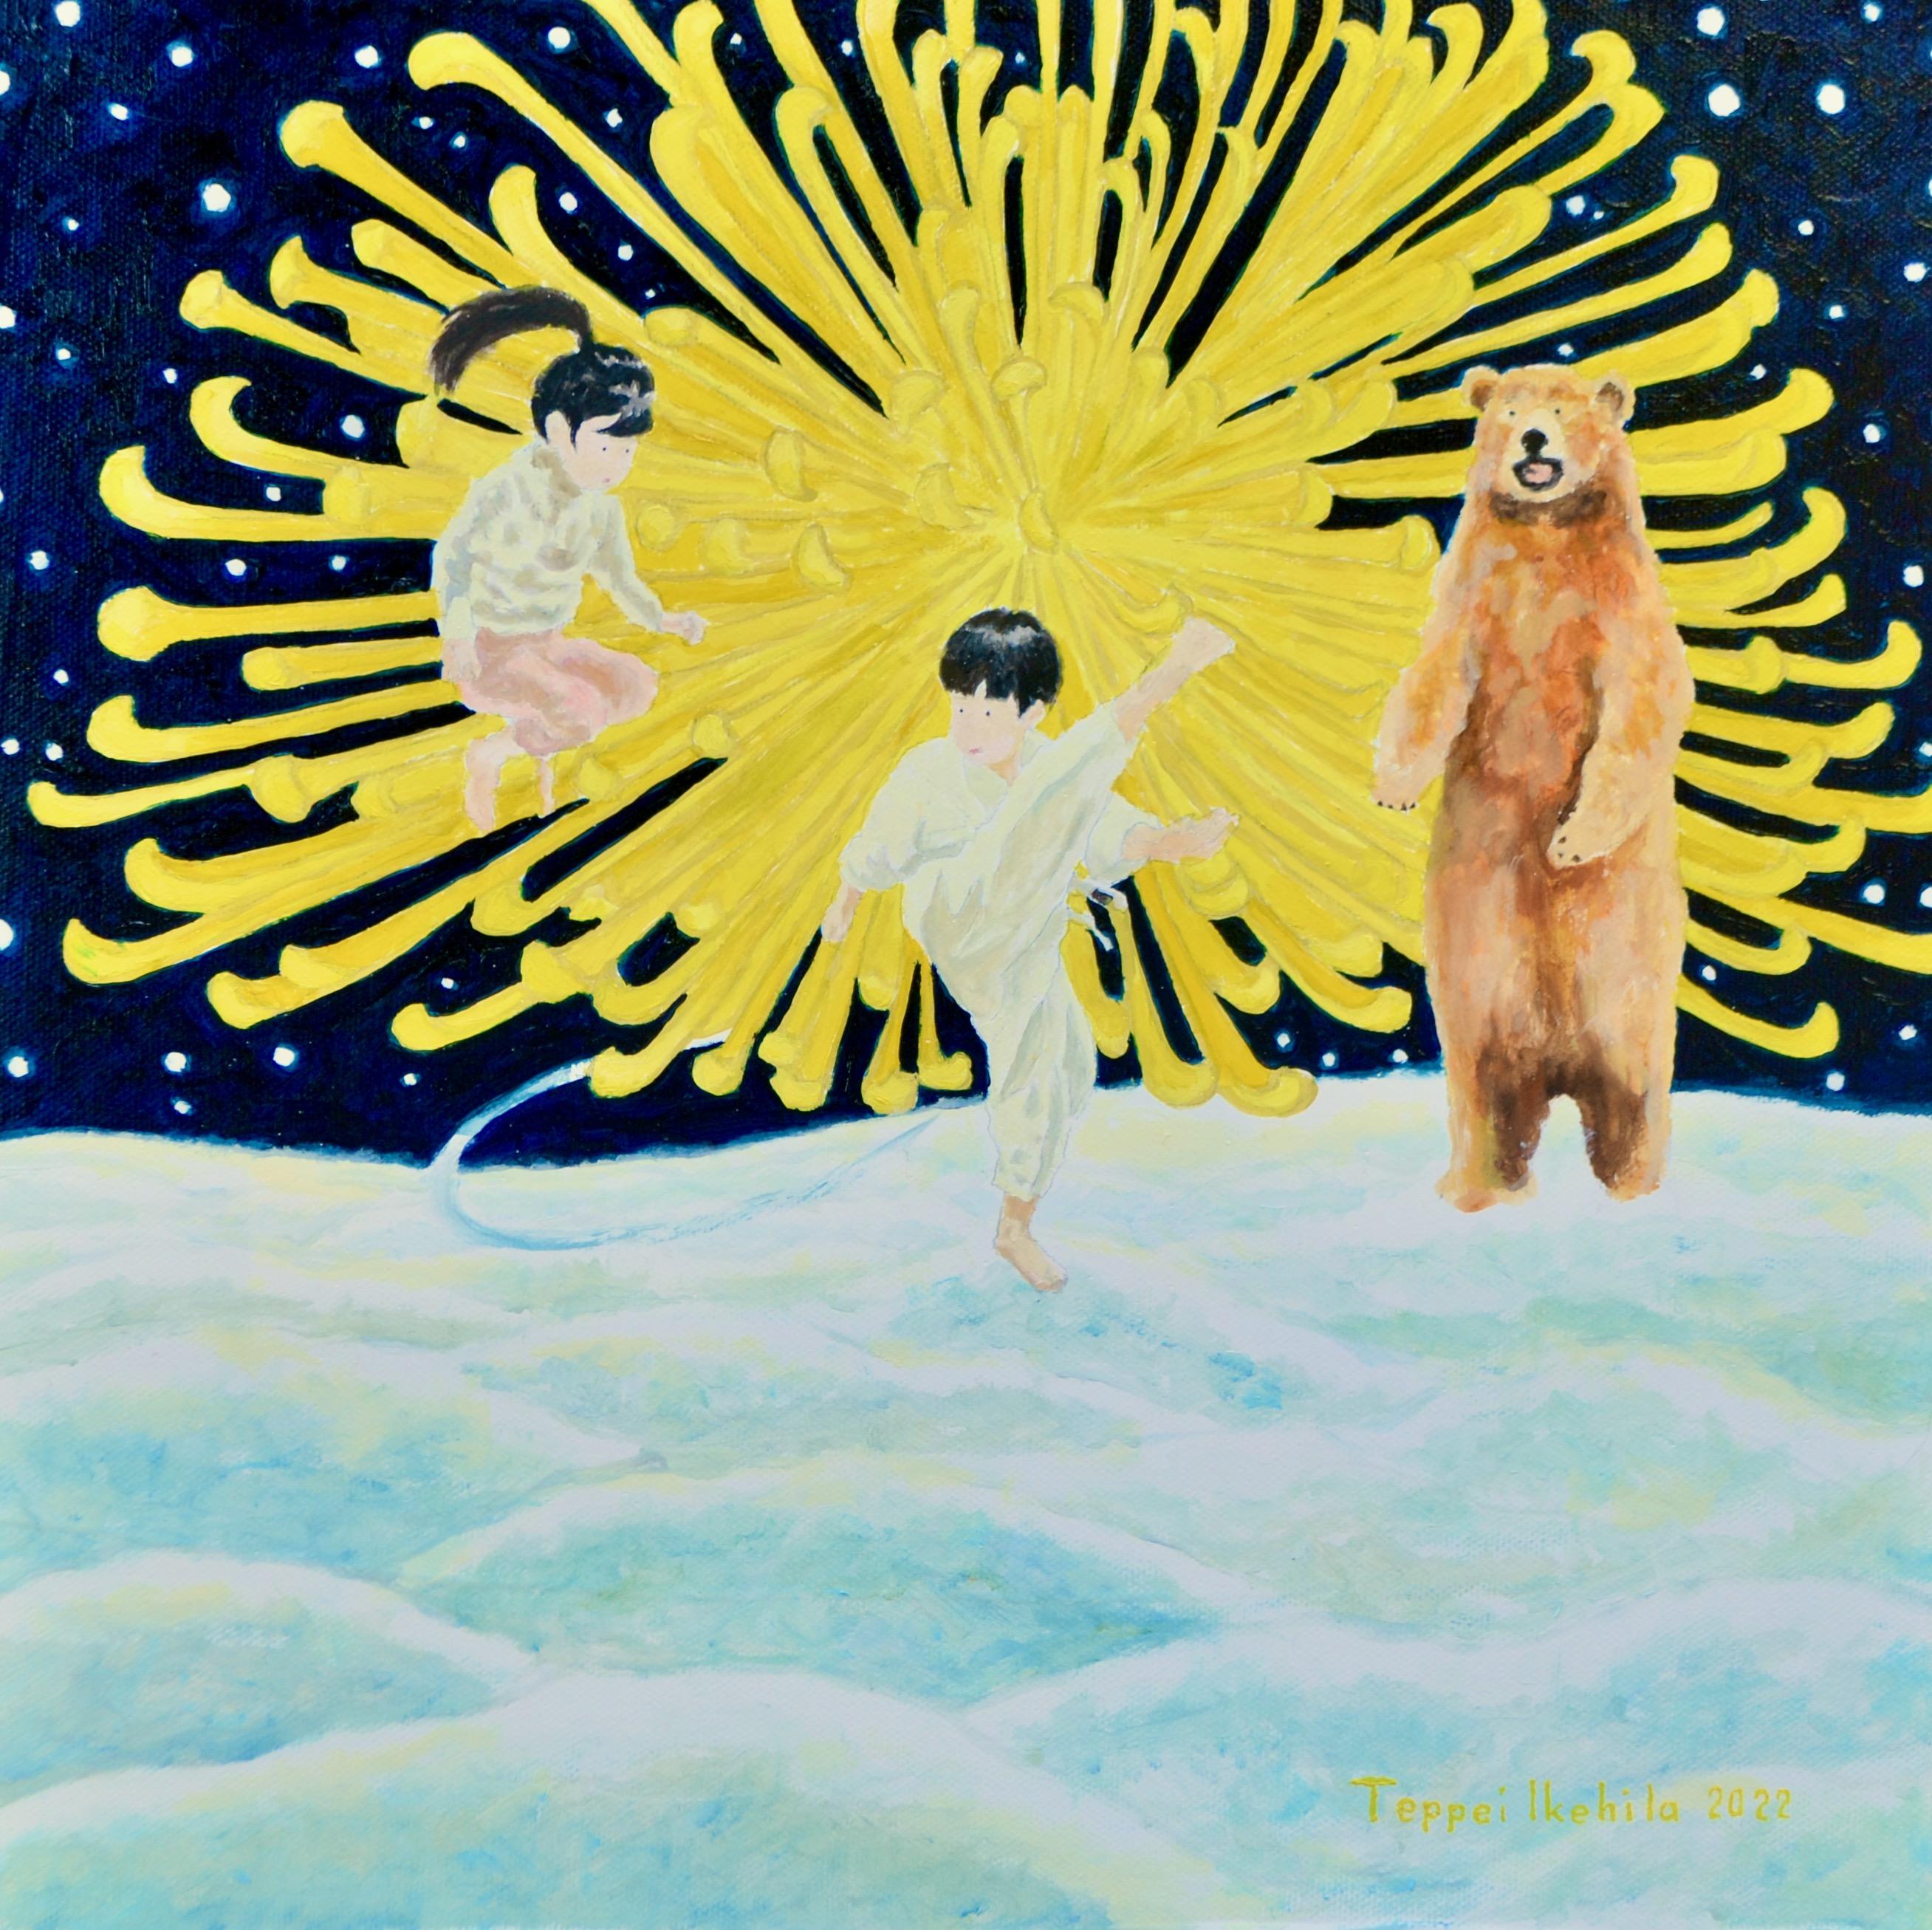 Zeitgenössische japanische Kunst von Teppei Ikehila - The Bear Wants you to Stop Fight